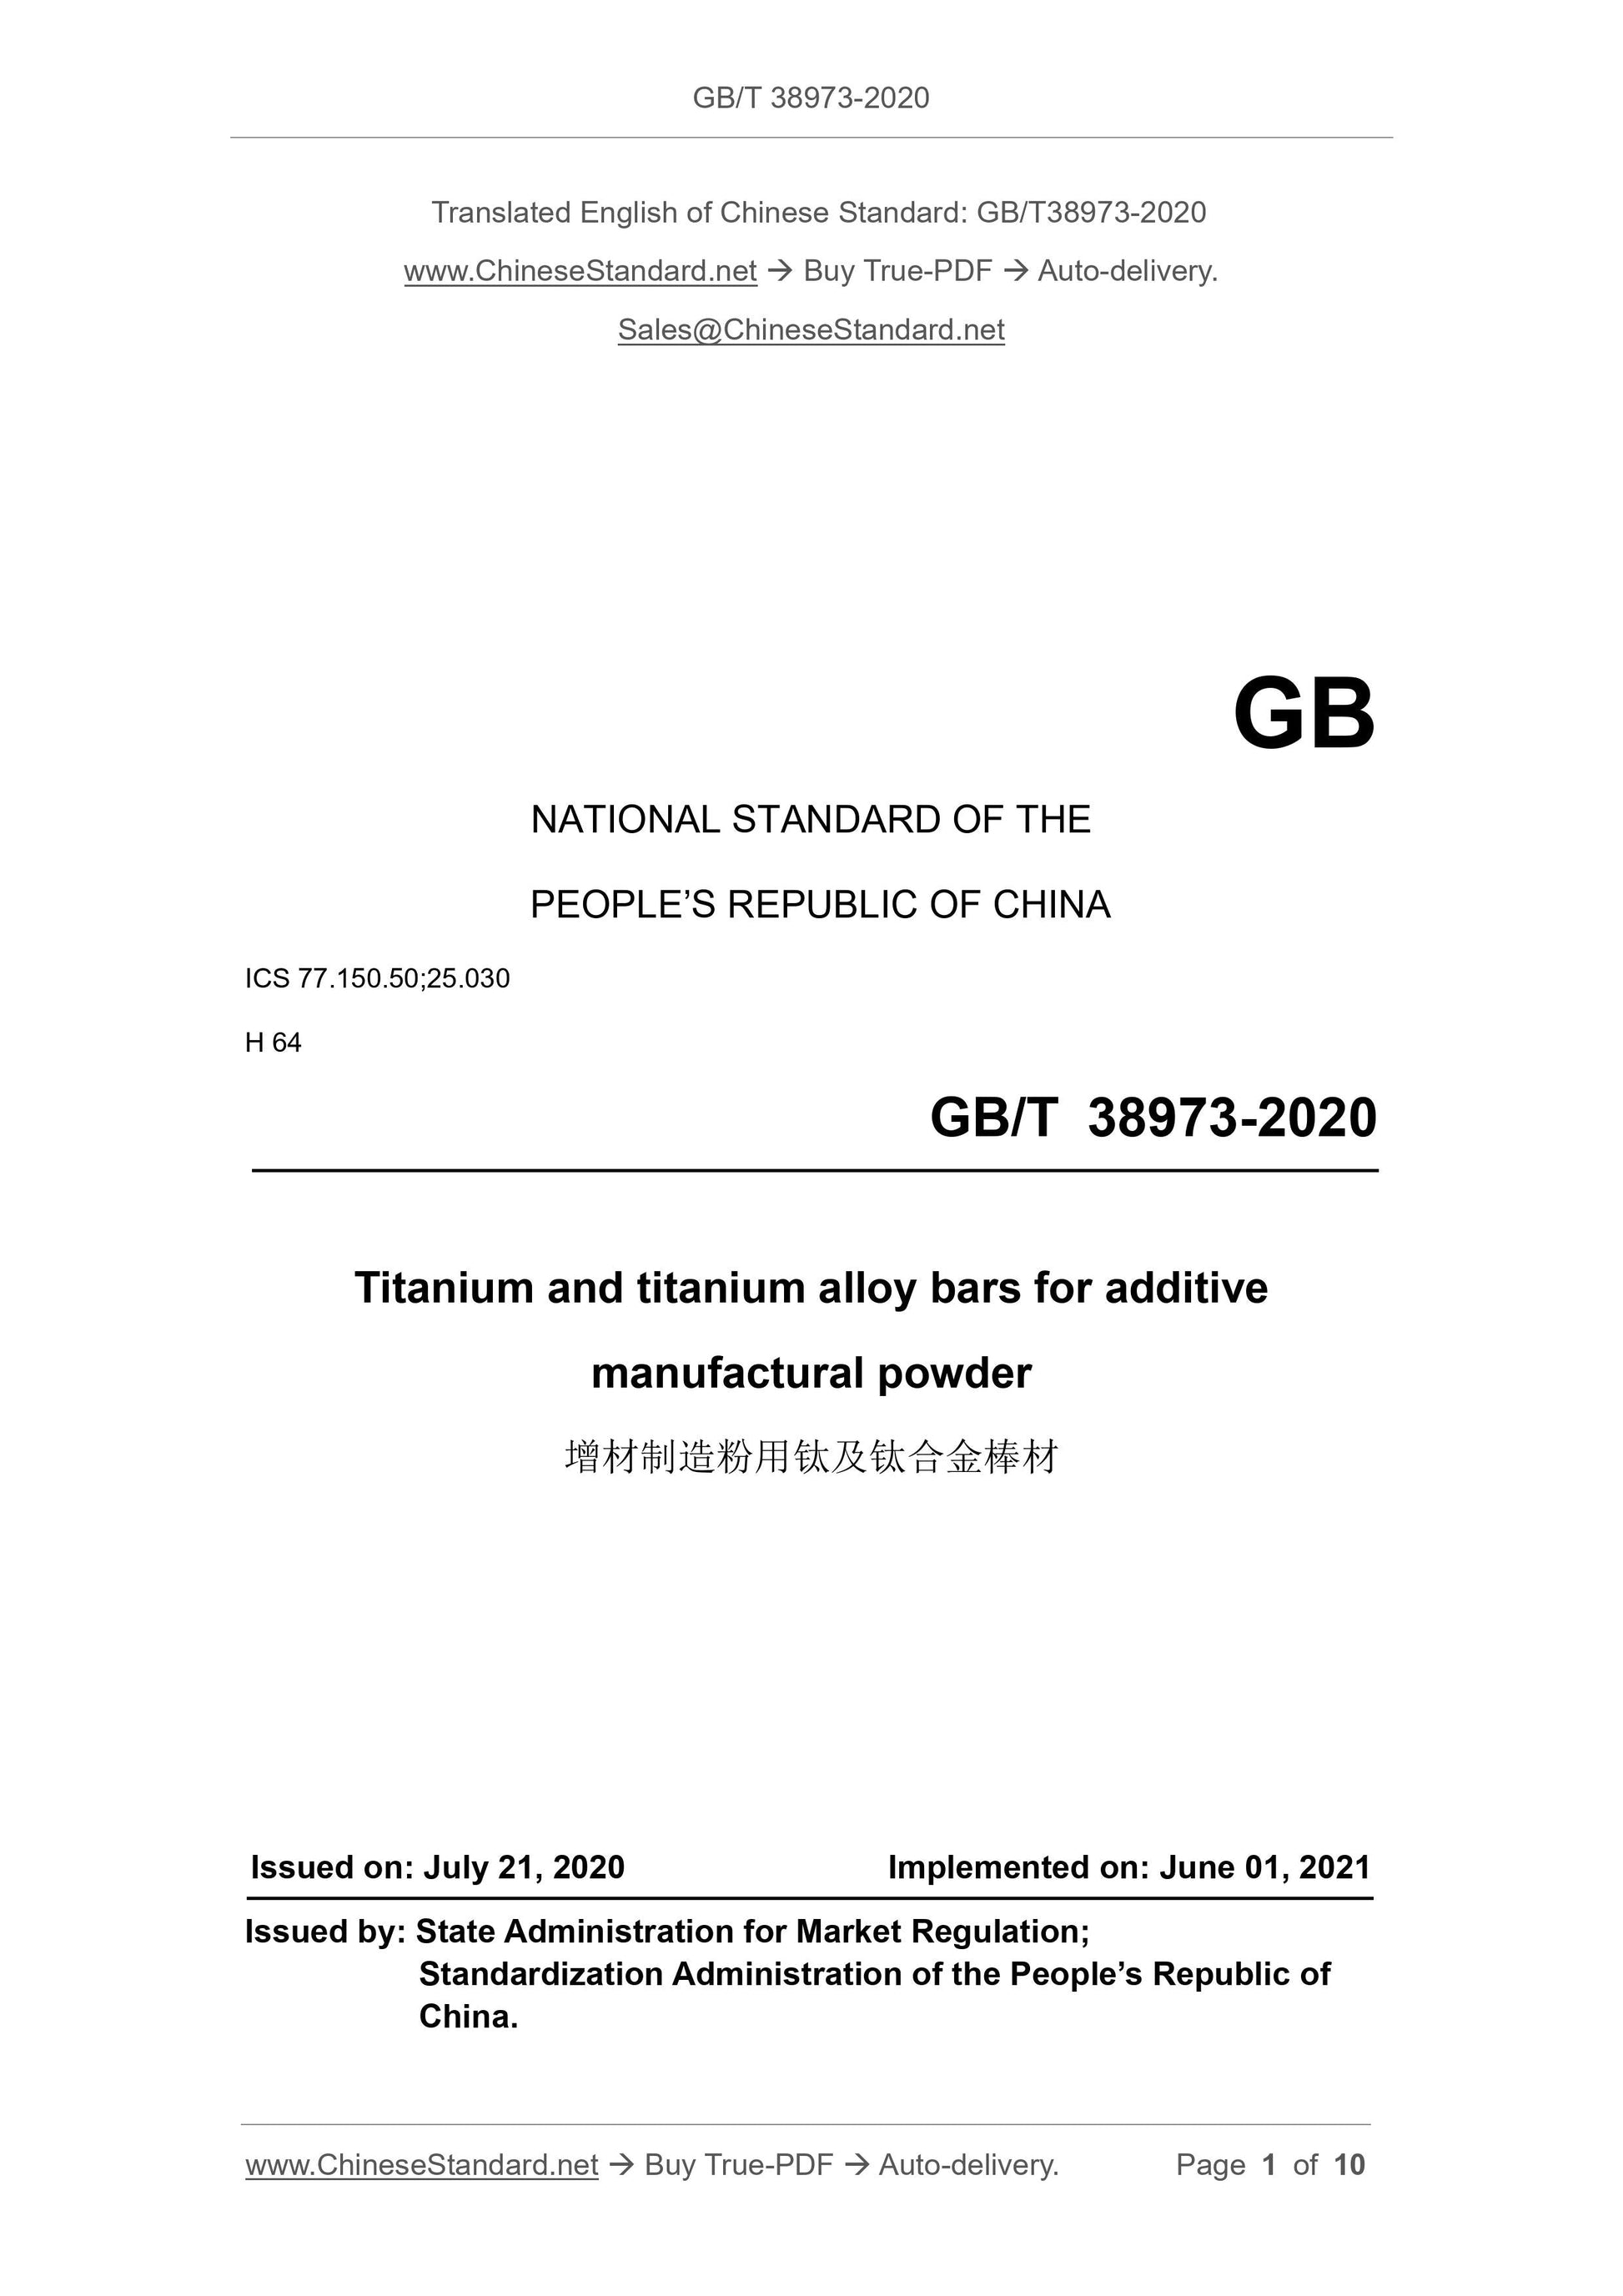 GBT38973-2020 Page 1